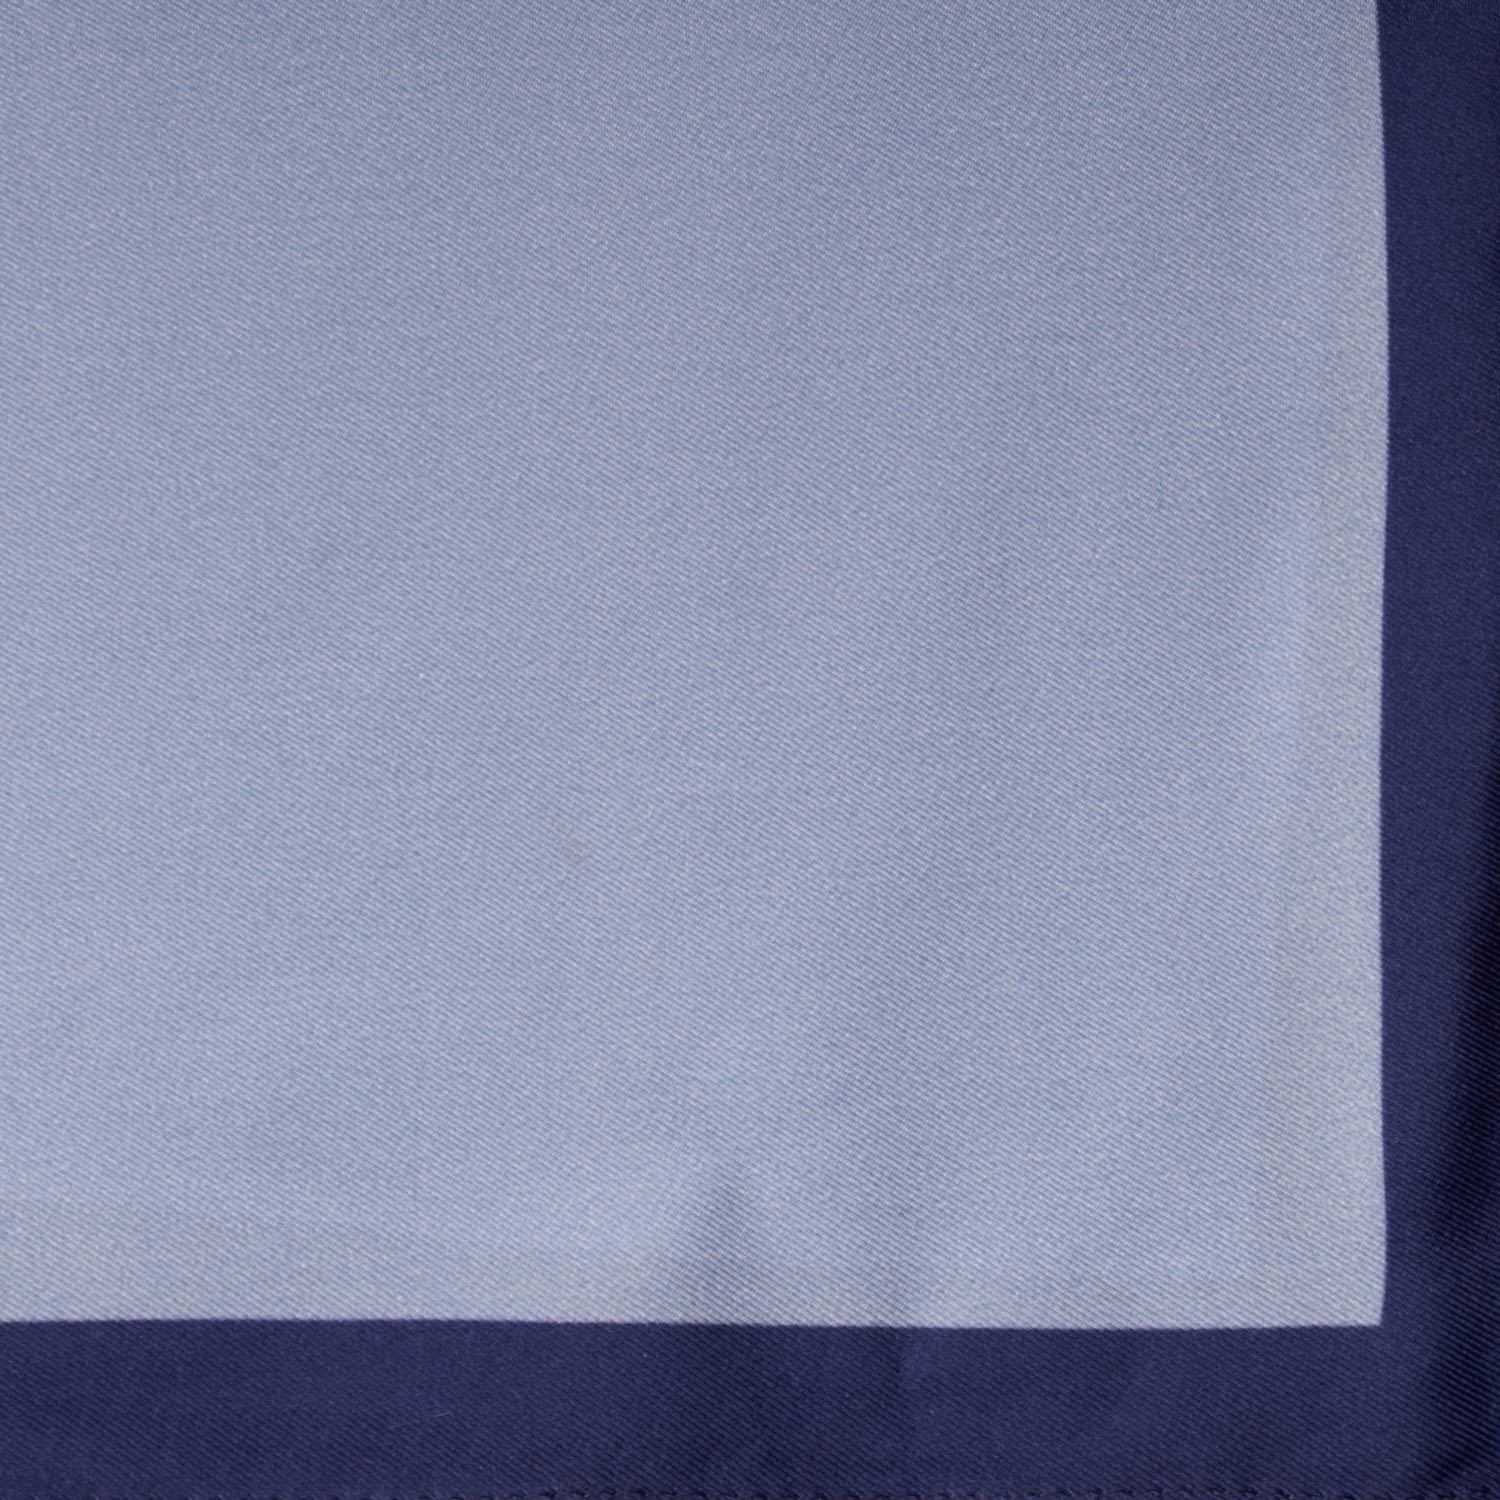 Fazzoletto da Taschino Vintage di Seta Azzurro Blu Navy Tinta Unita POCV736 Dettaglio